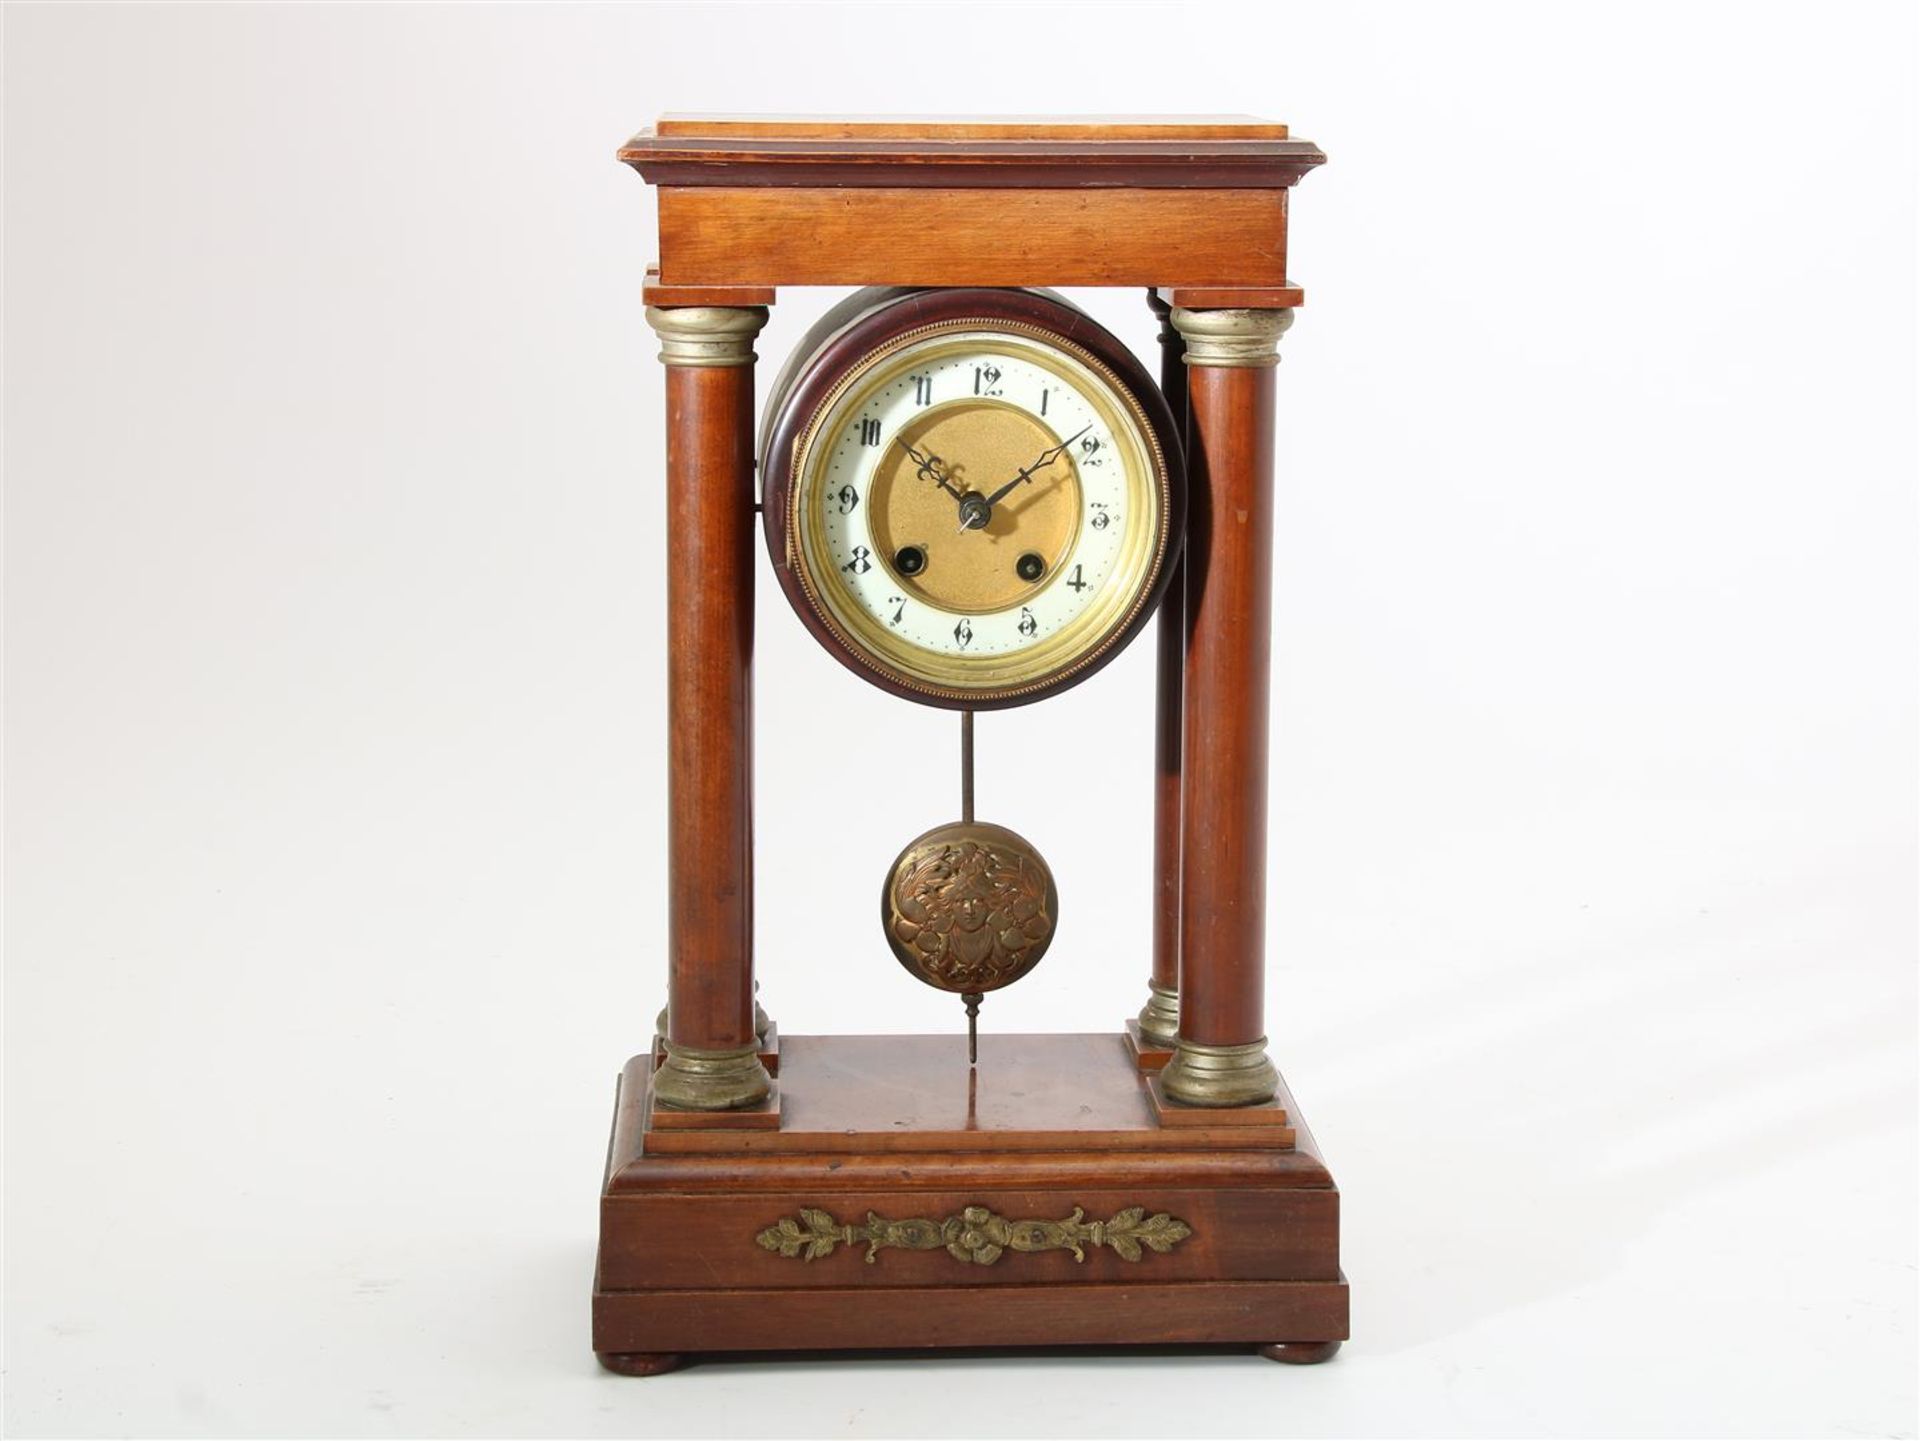 French Empire style column mantel clock